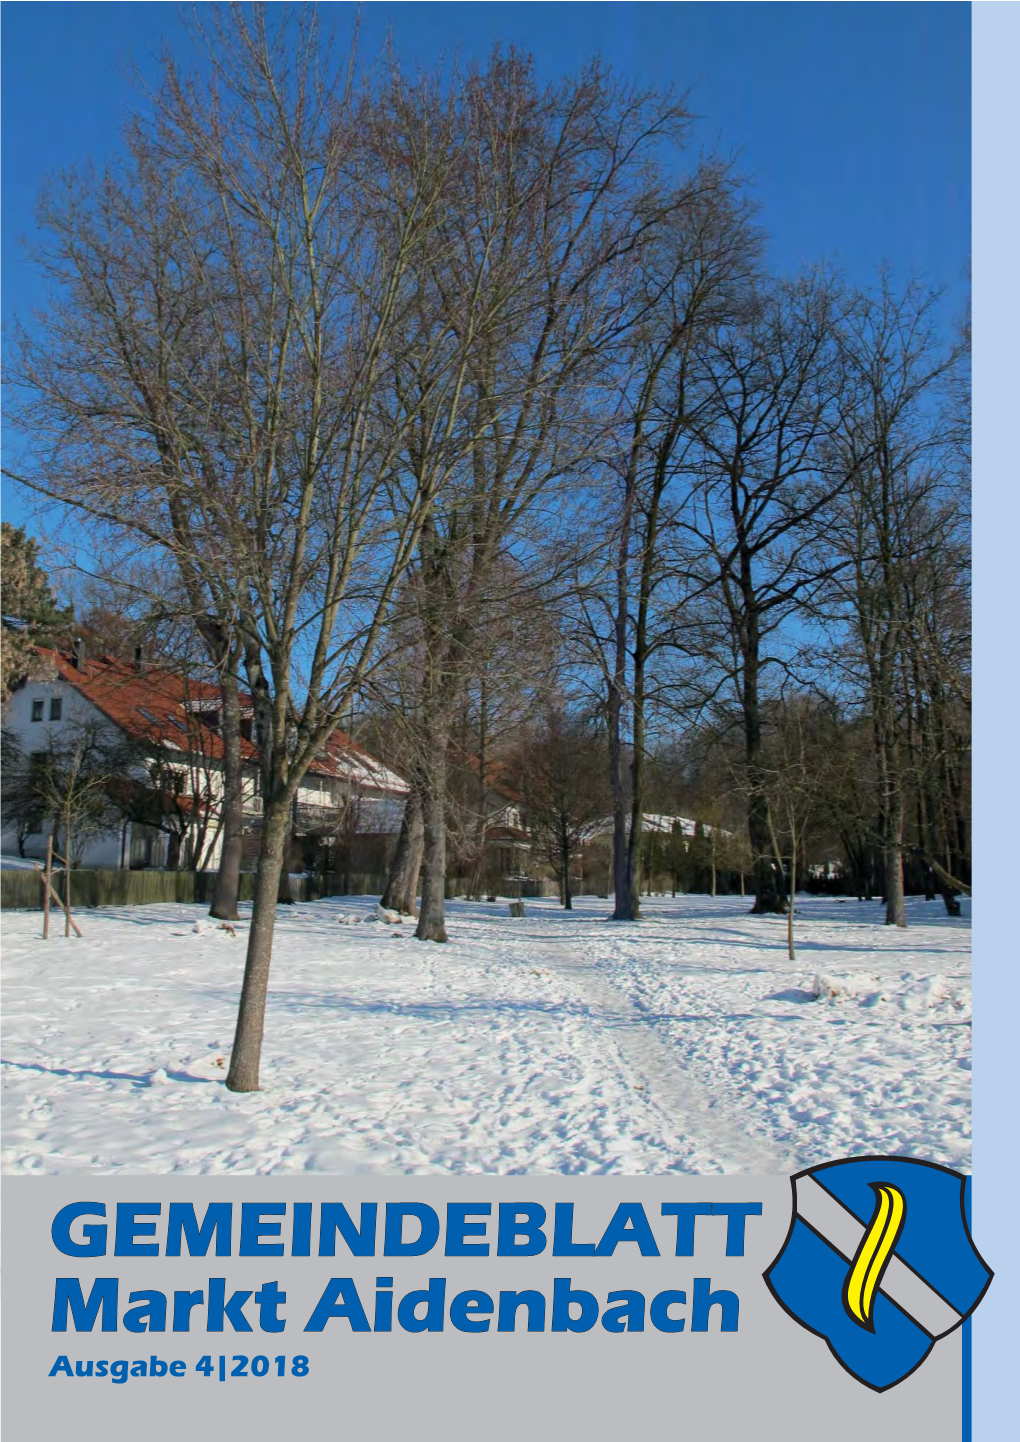 Gemeindeblatt Aidenbach 2018-04.Indd